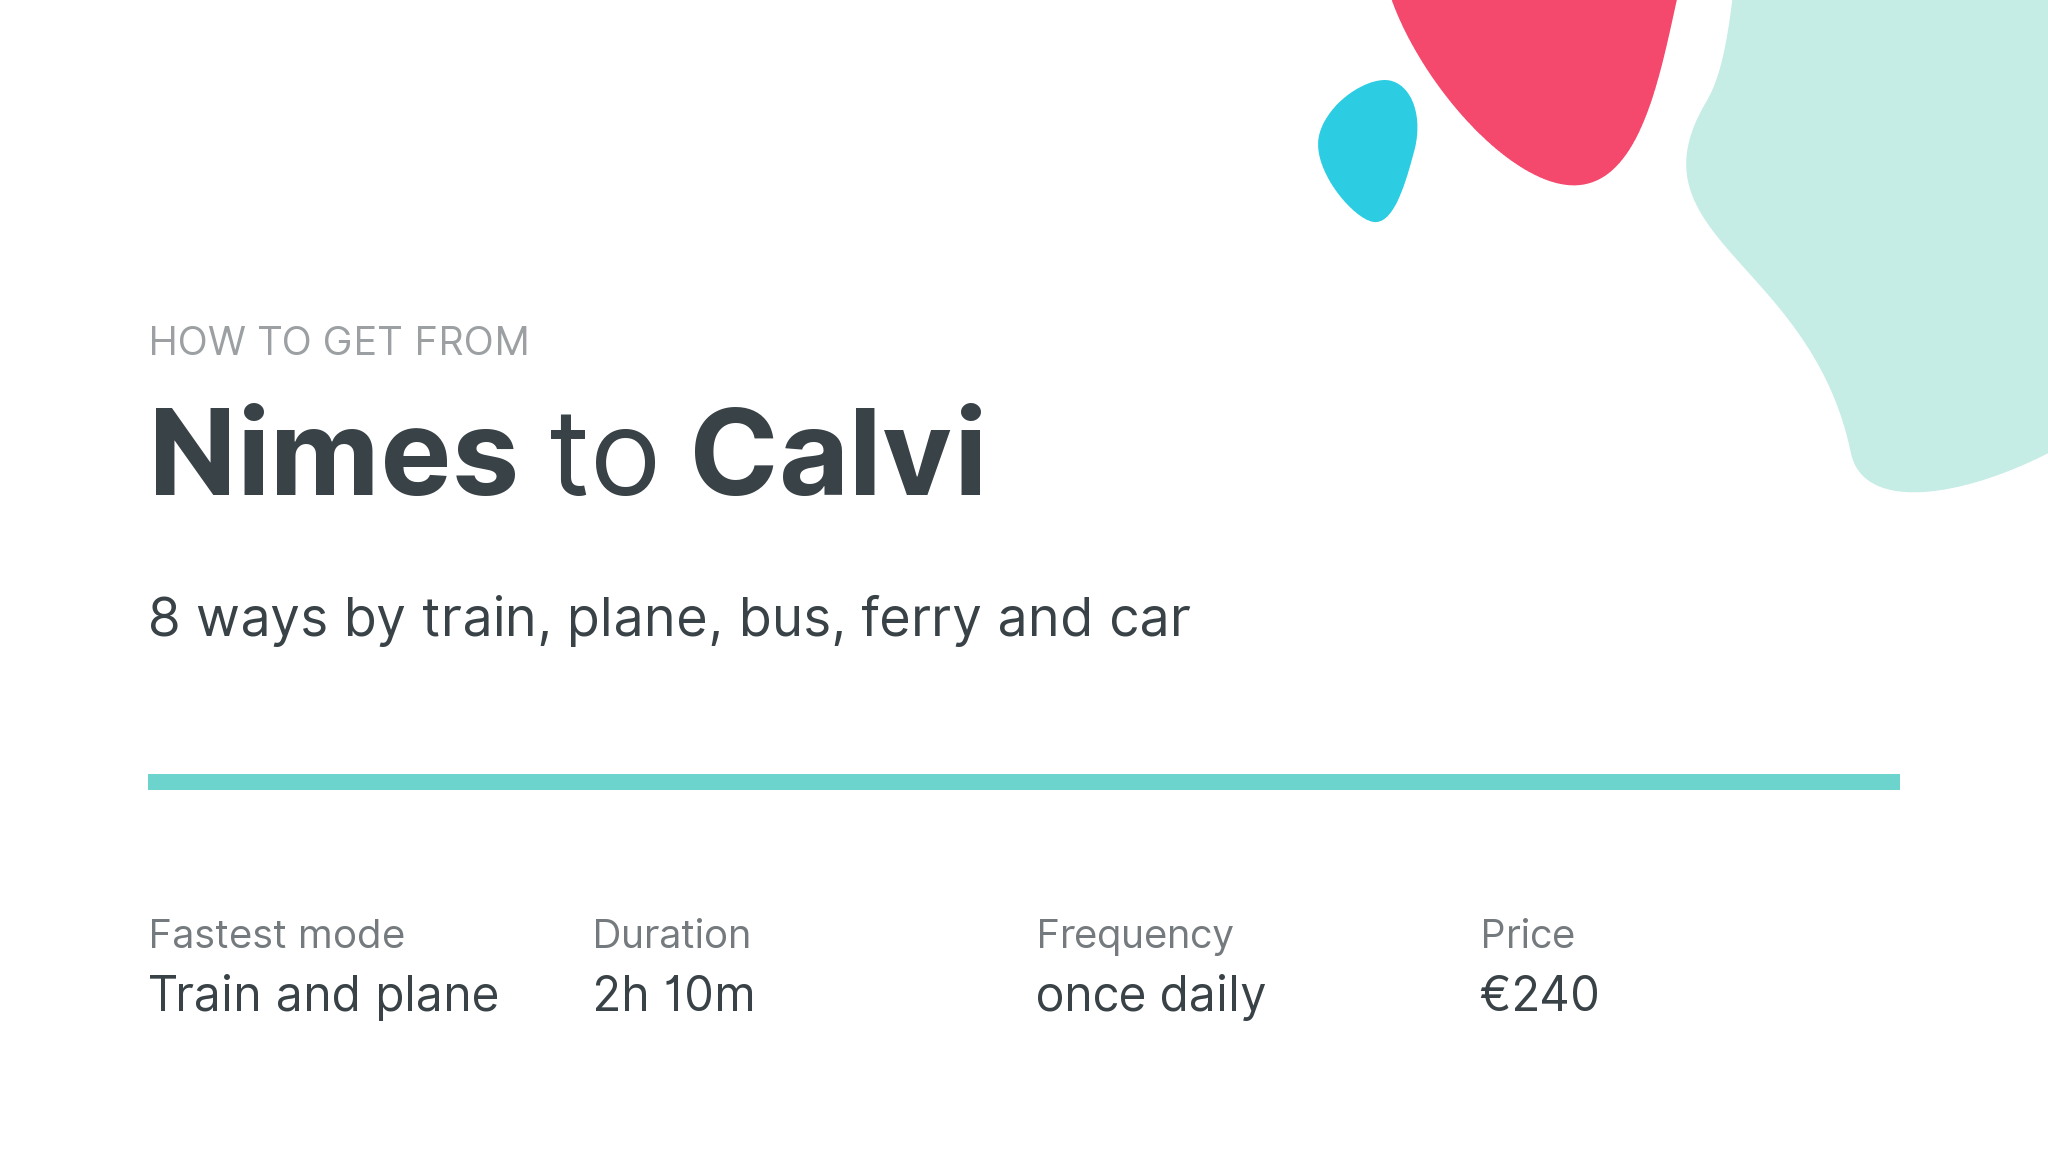 How do I get from Nimes to Calvi